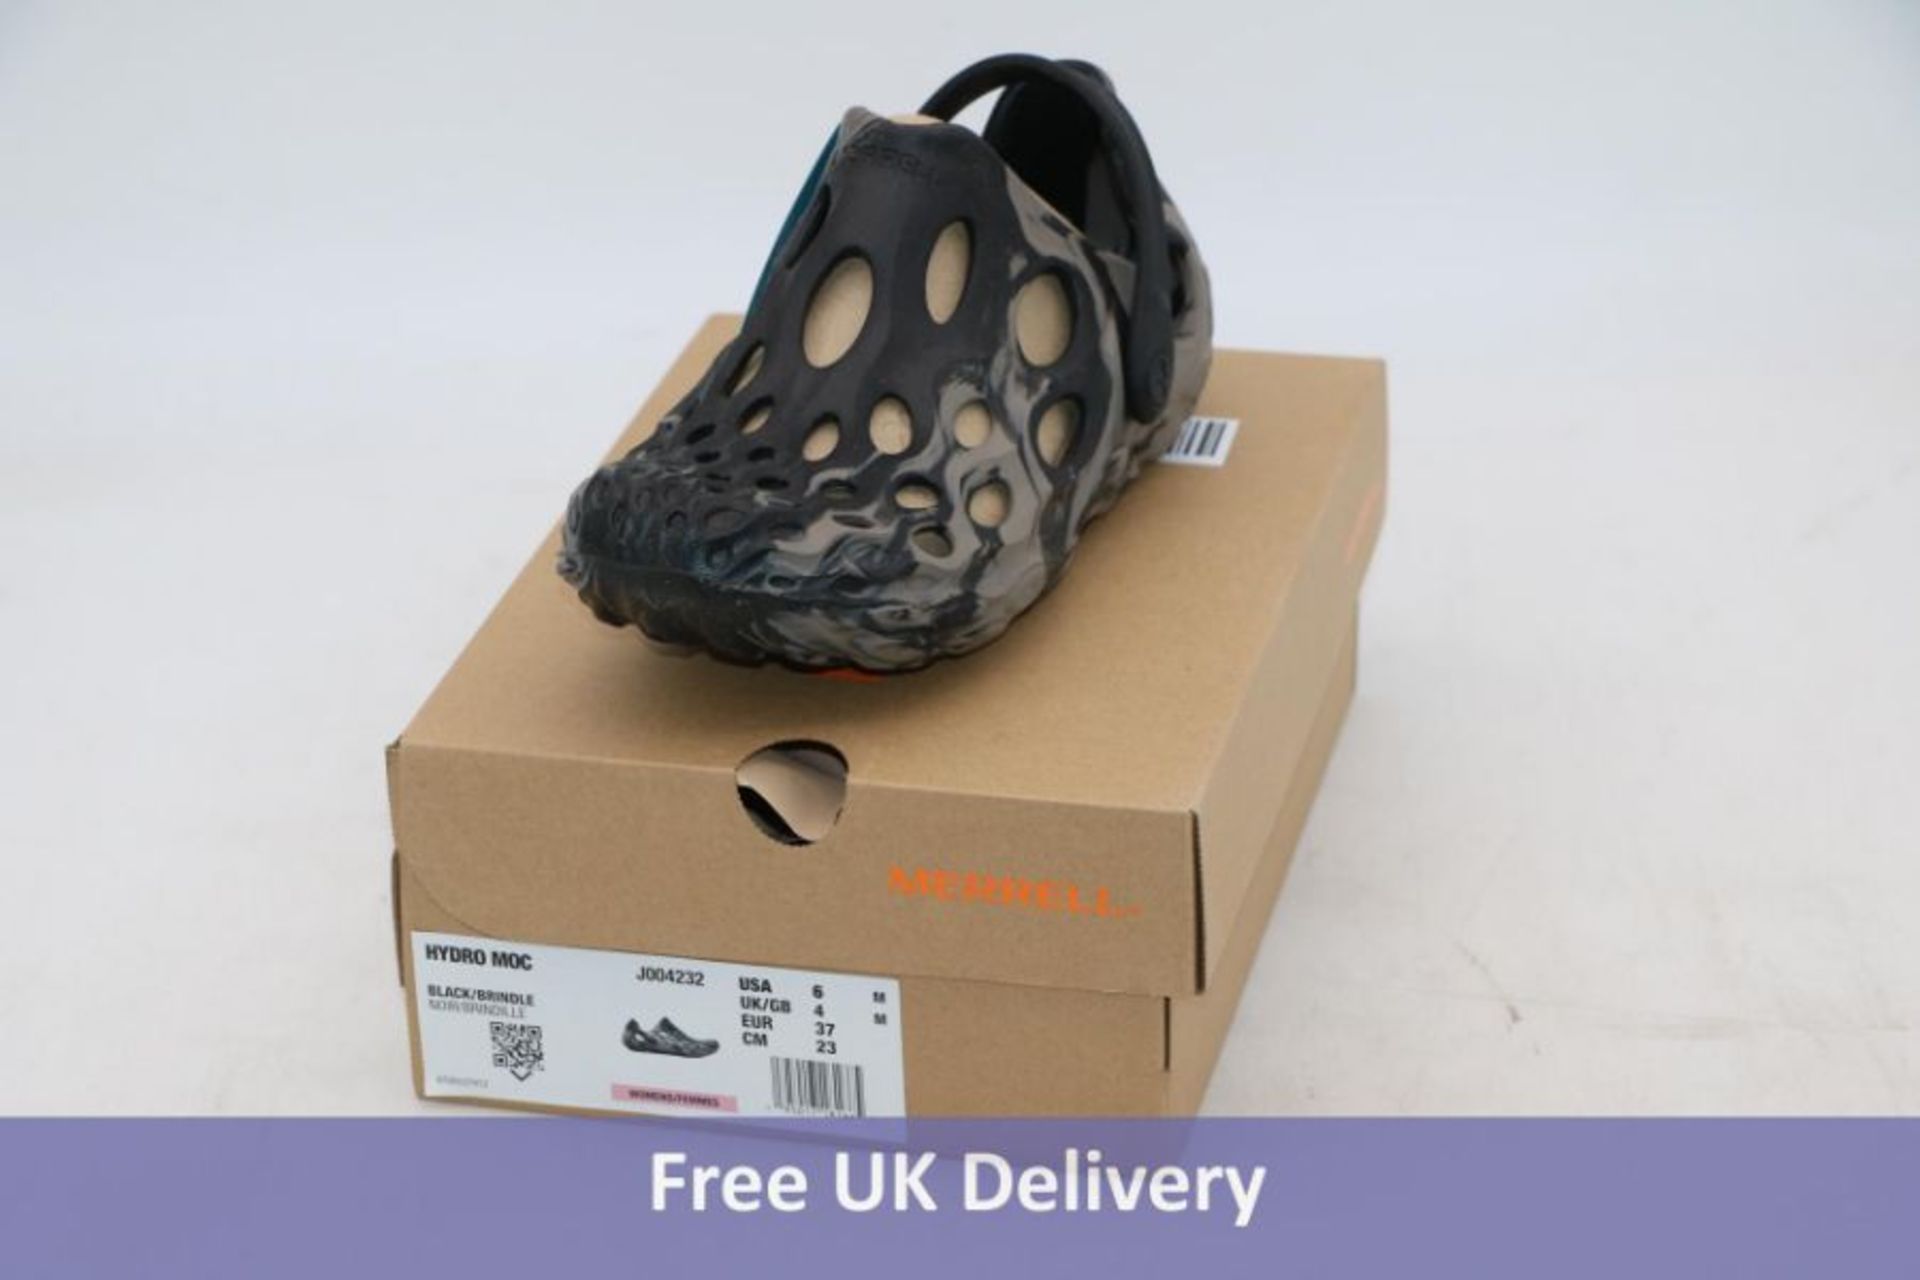 Three Merrell Hydro Moc Women's Sandals, Black/Brindle, 1x UK 4, 2x UK 5